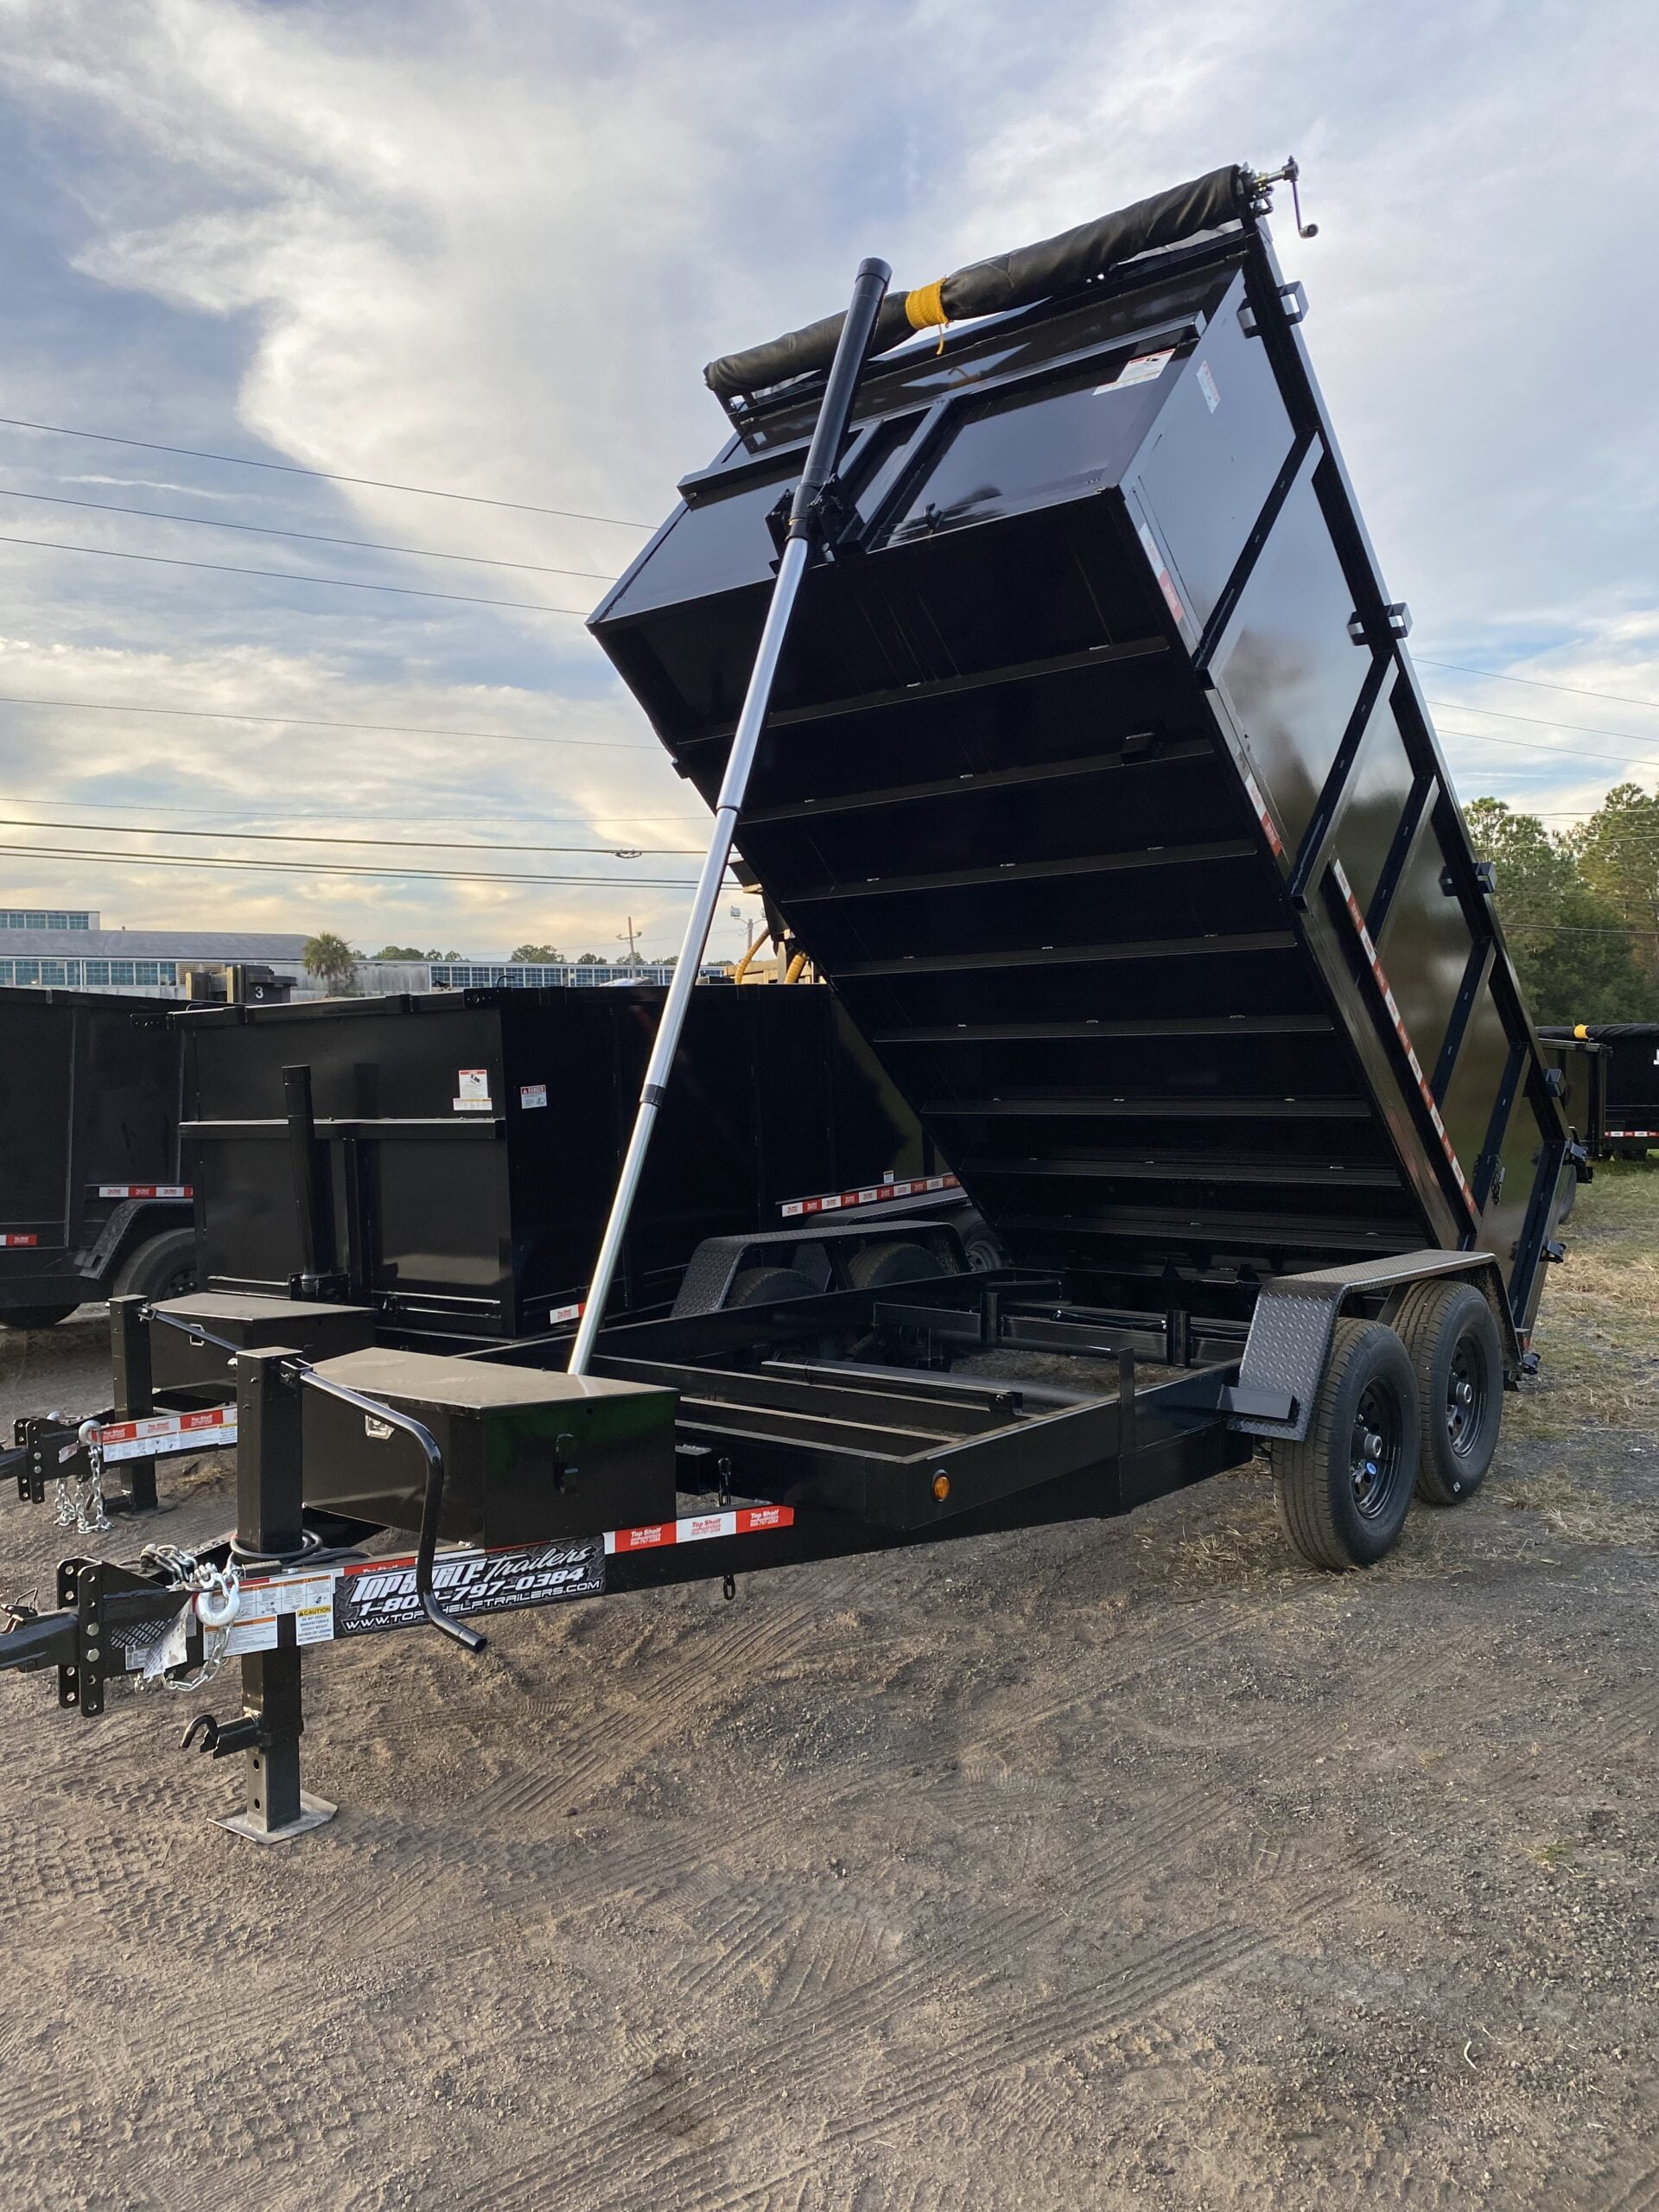 heavy duty dump trailer with telescopic lift built by Top Shelf Trailers